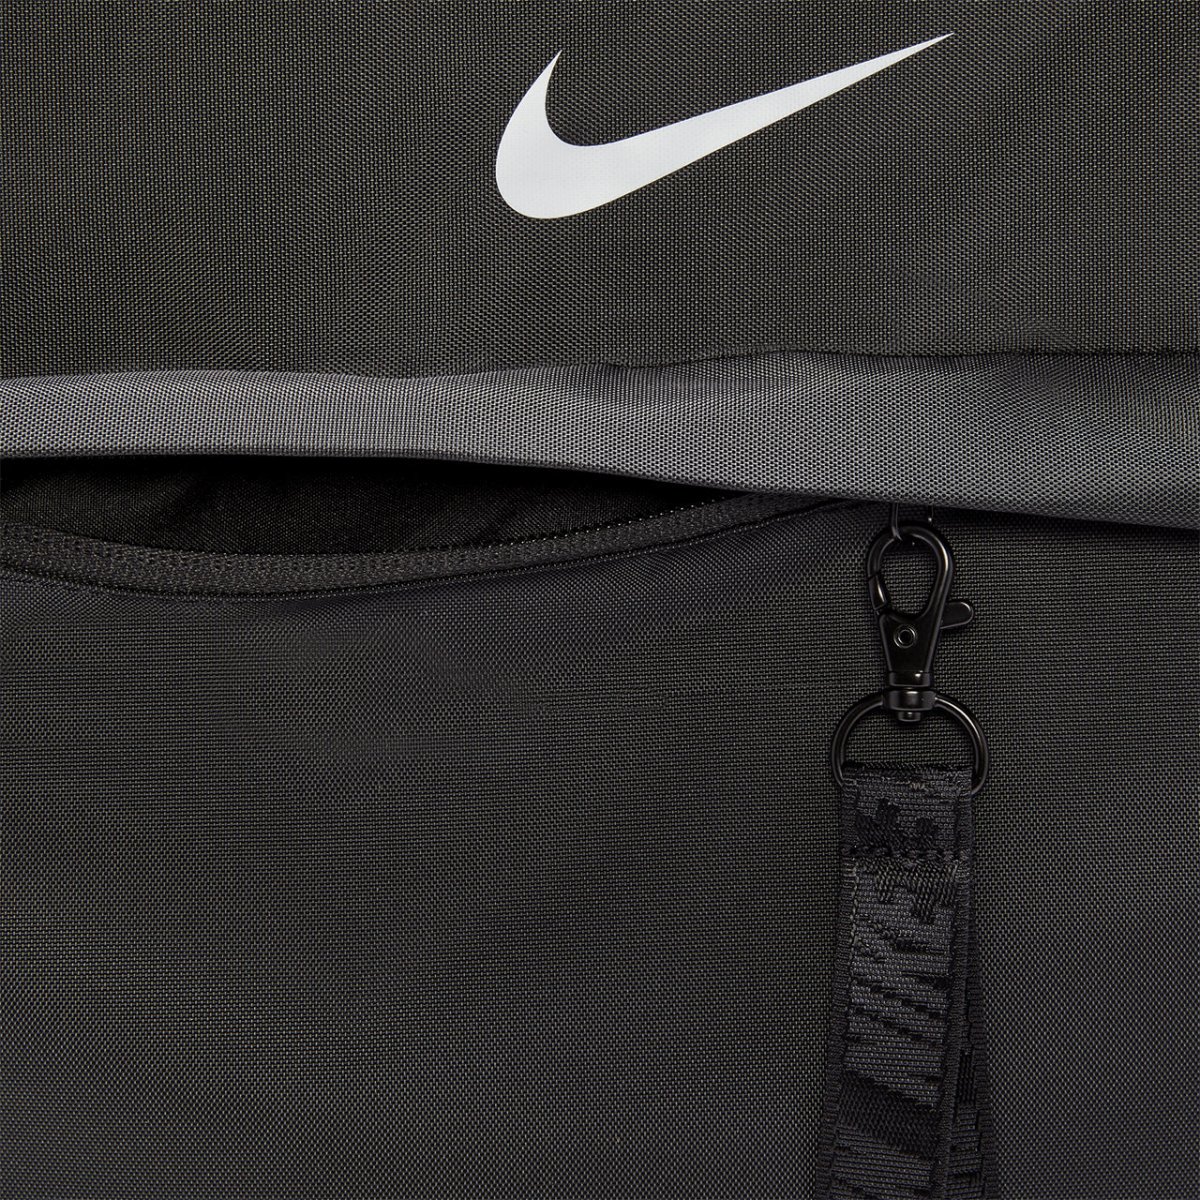 Nike Sportswear Essentials Tote Bag (Schwarz / Weiß)  - Allike Store